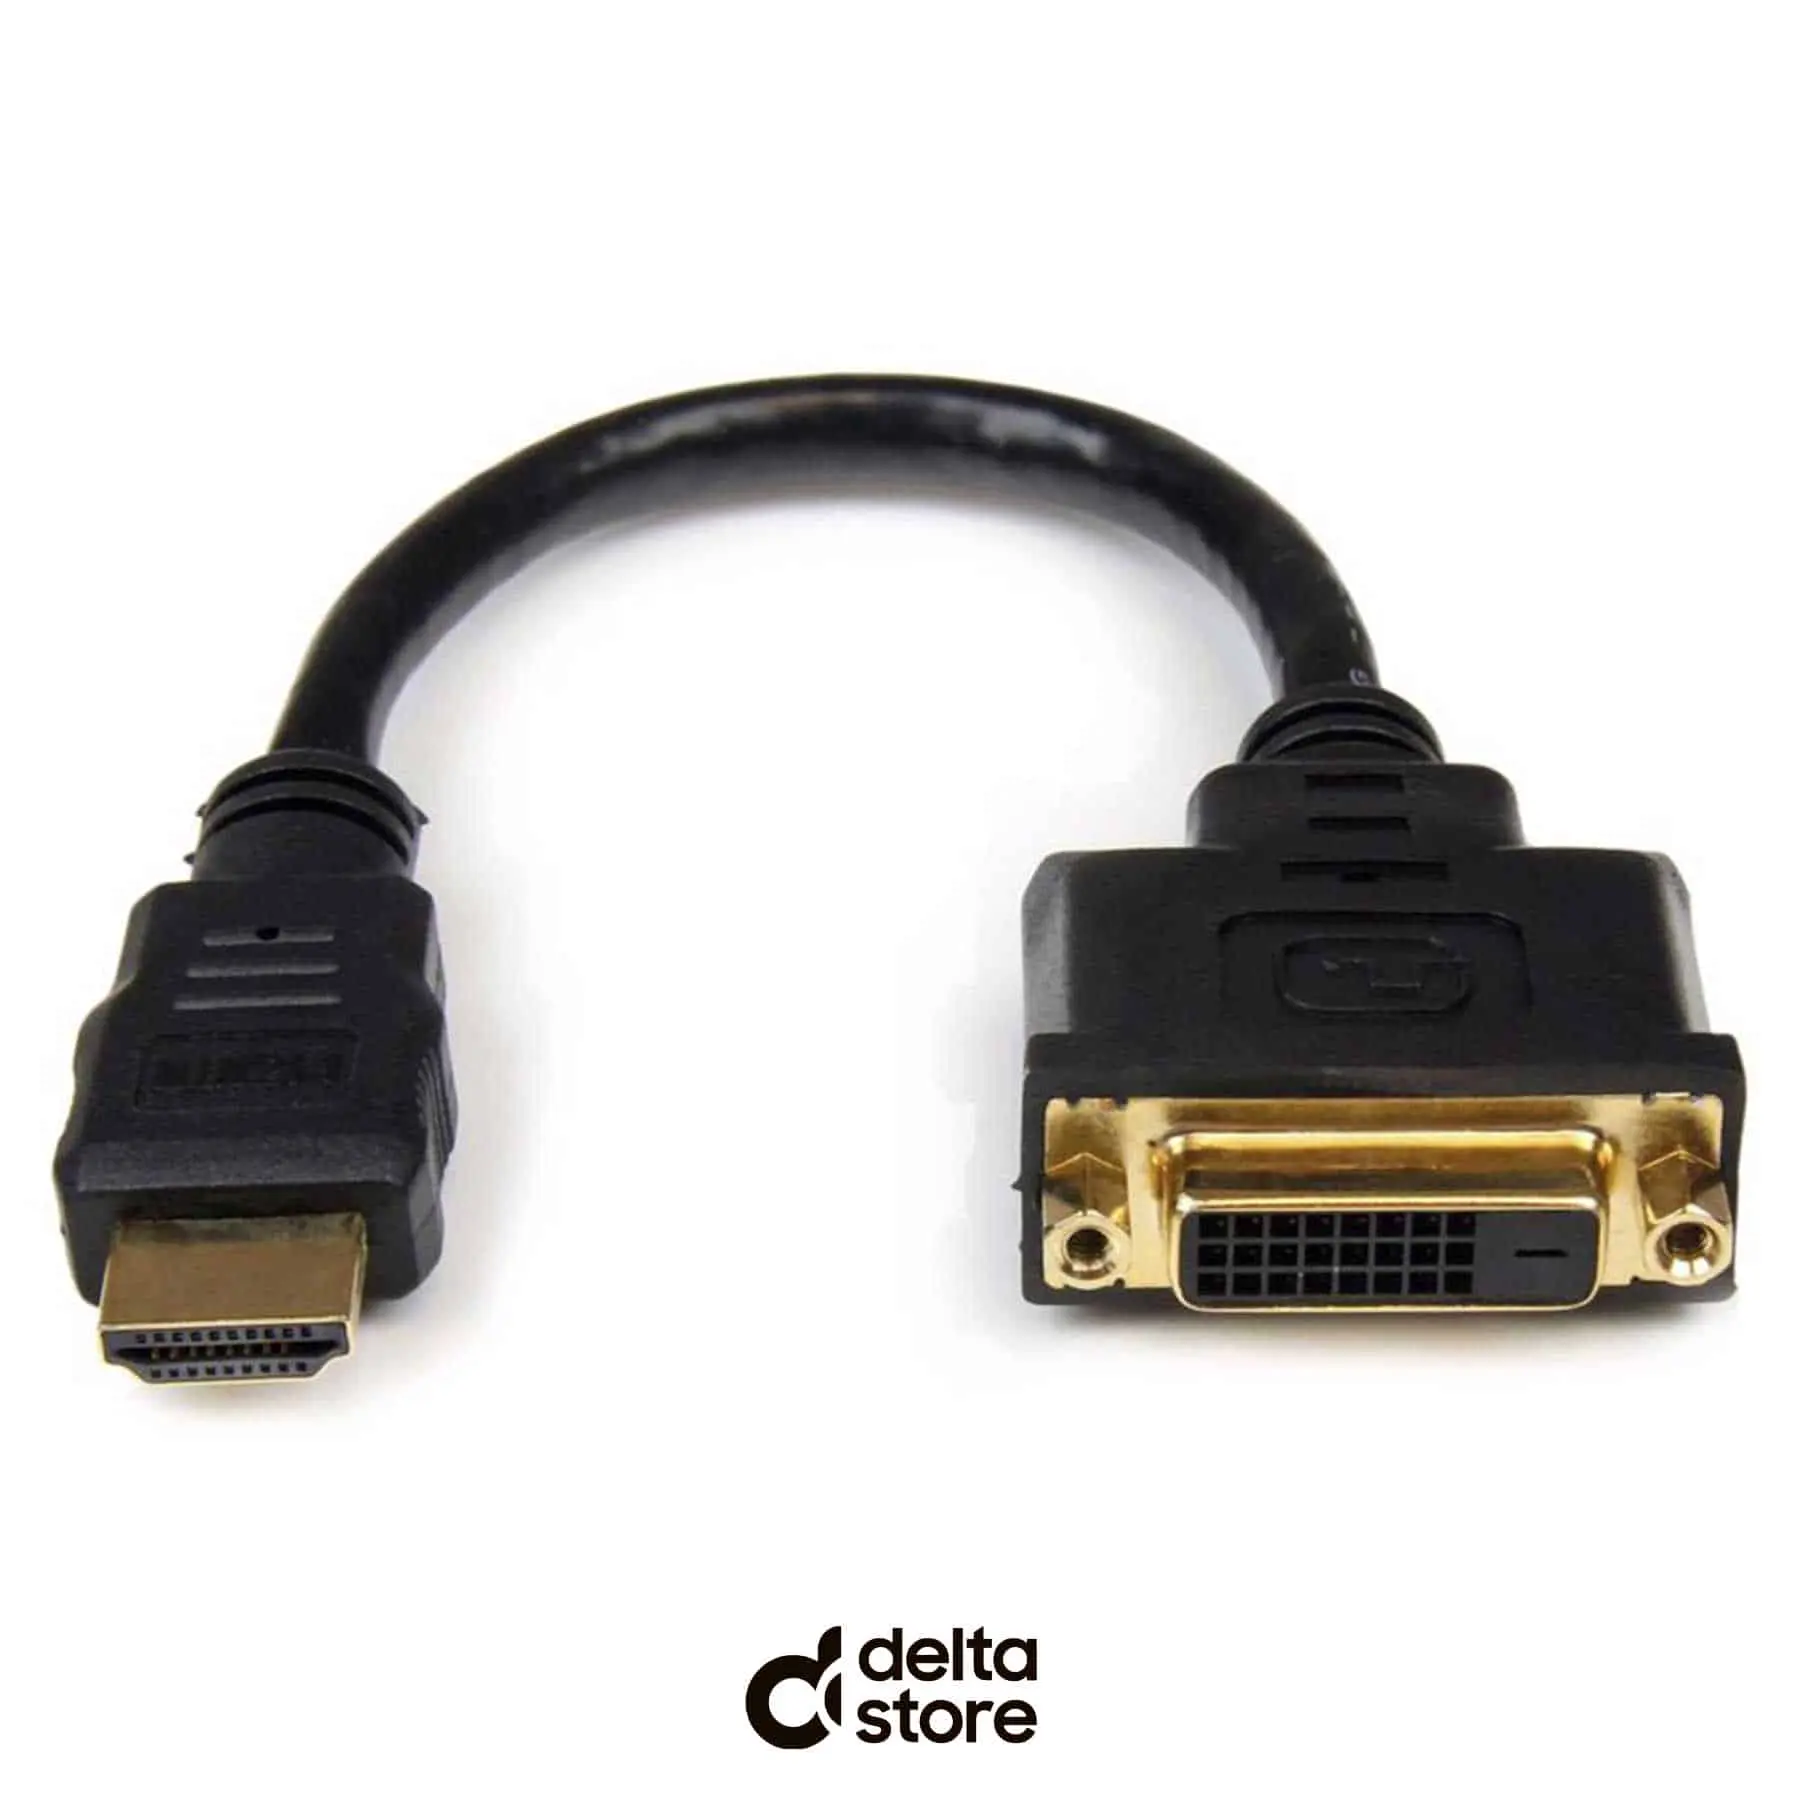 HDMI to DVI-D Converter